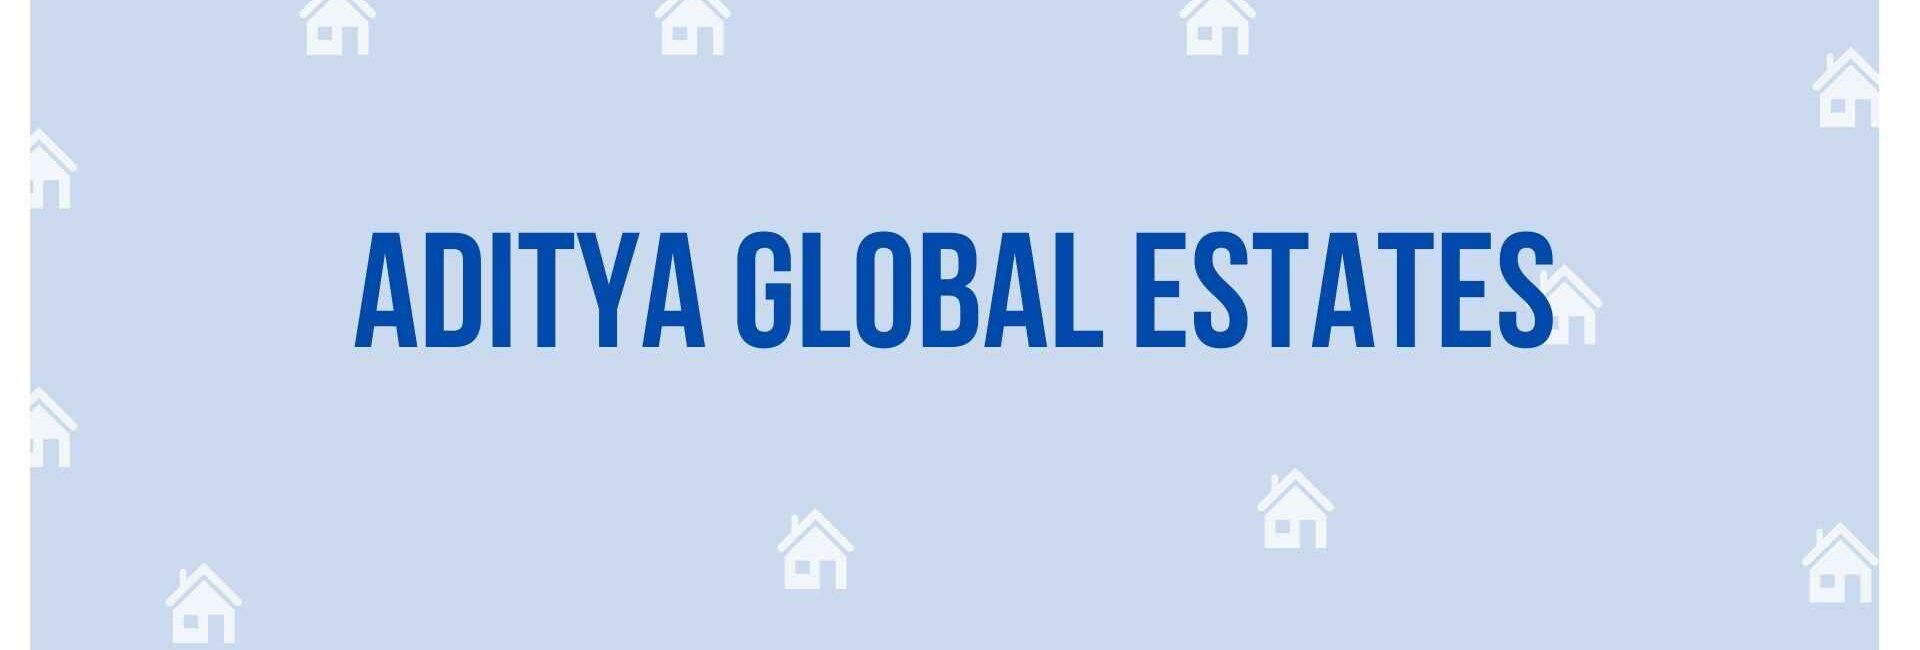 Aditya Global Estates - Property Dealer in Noida